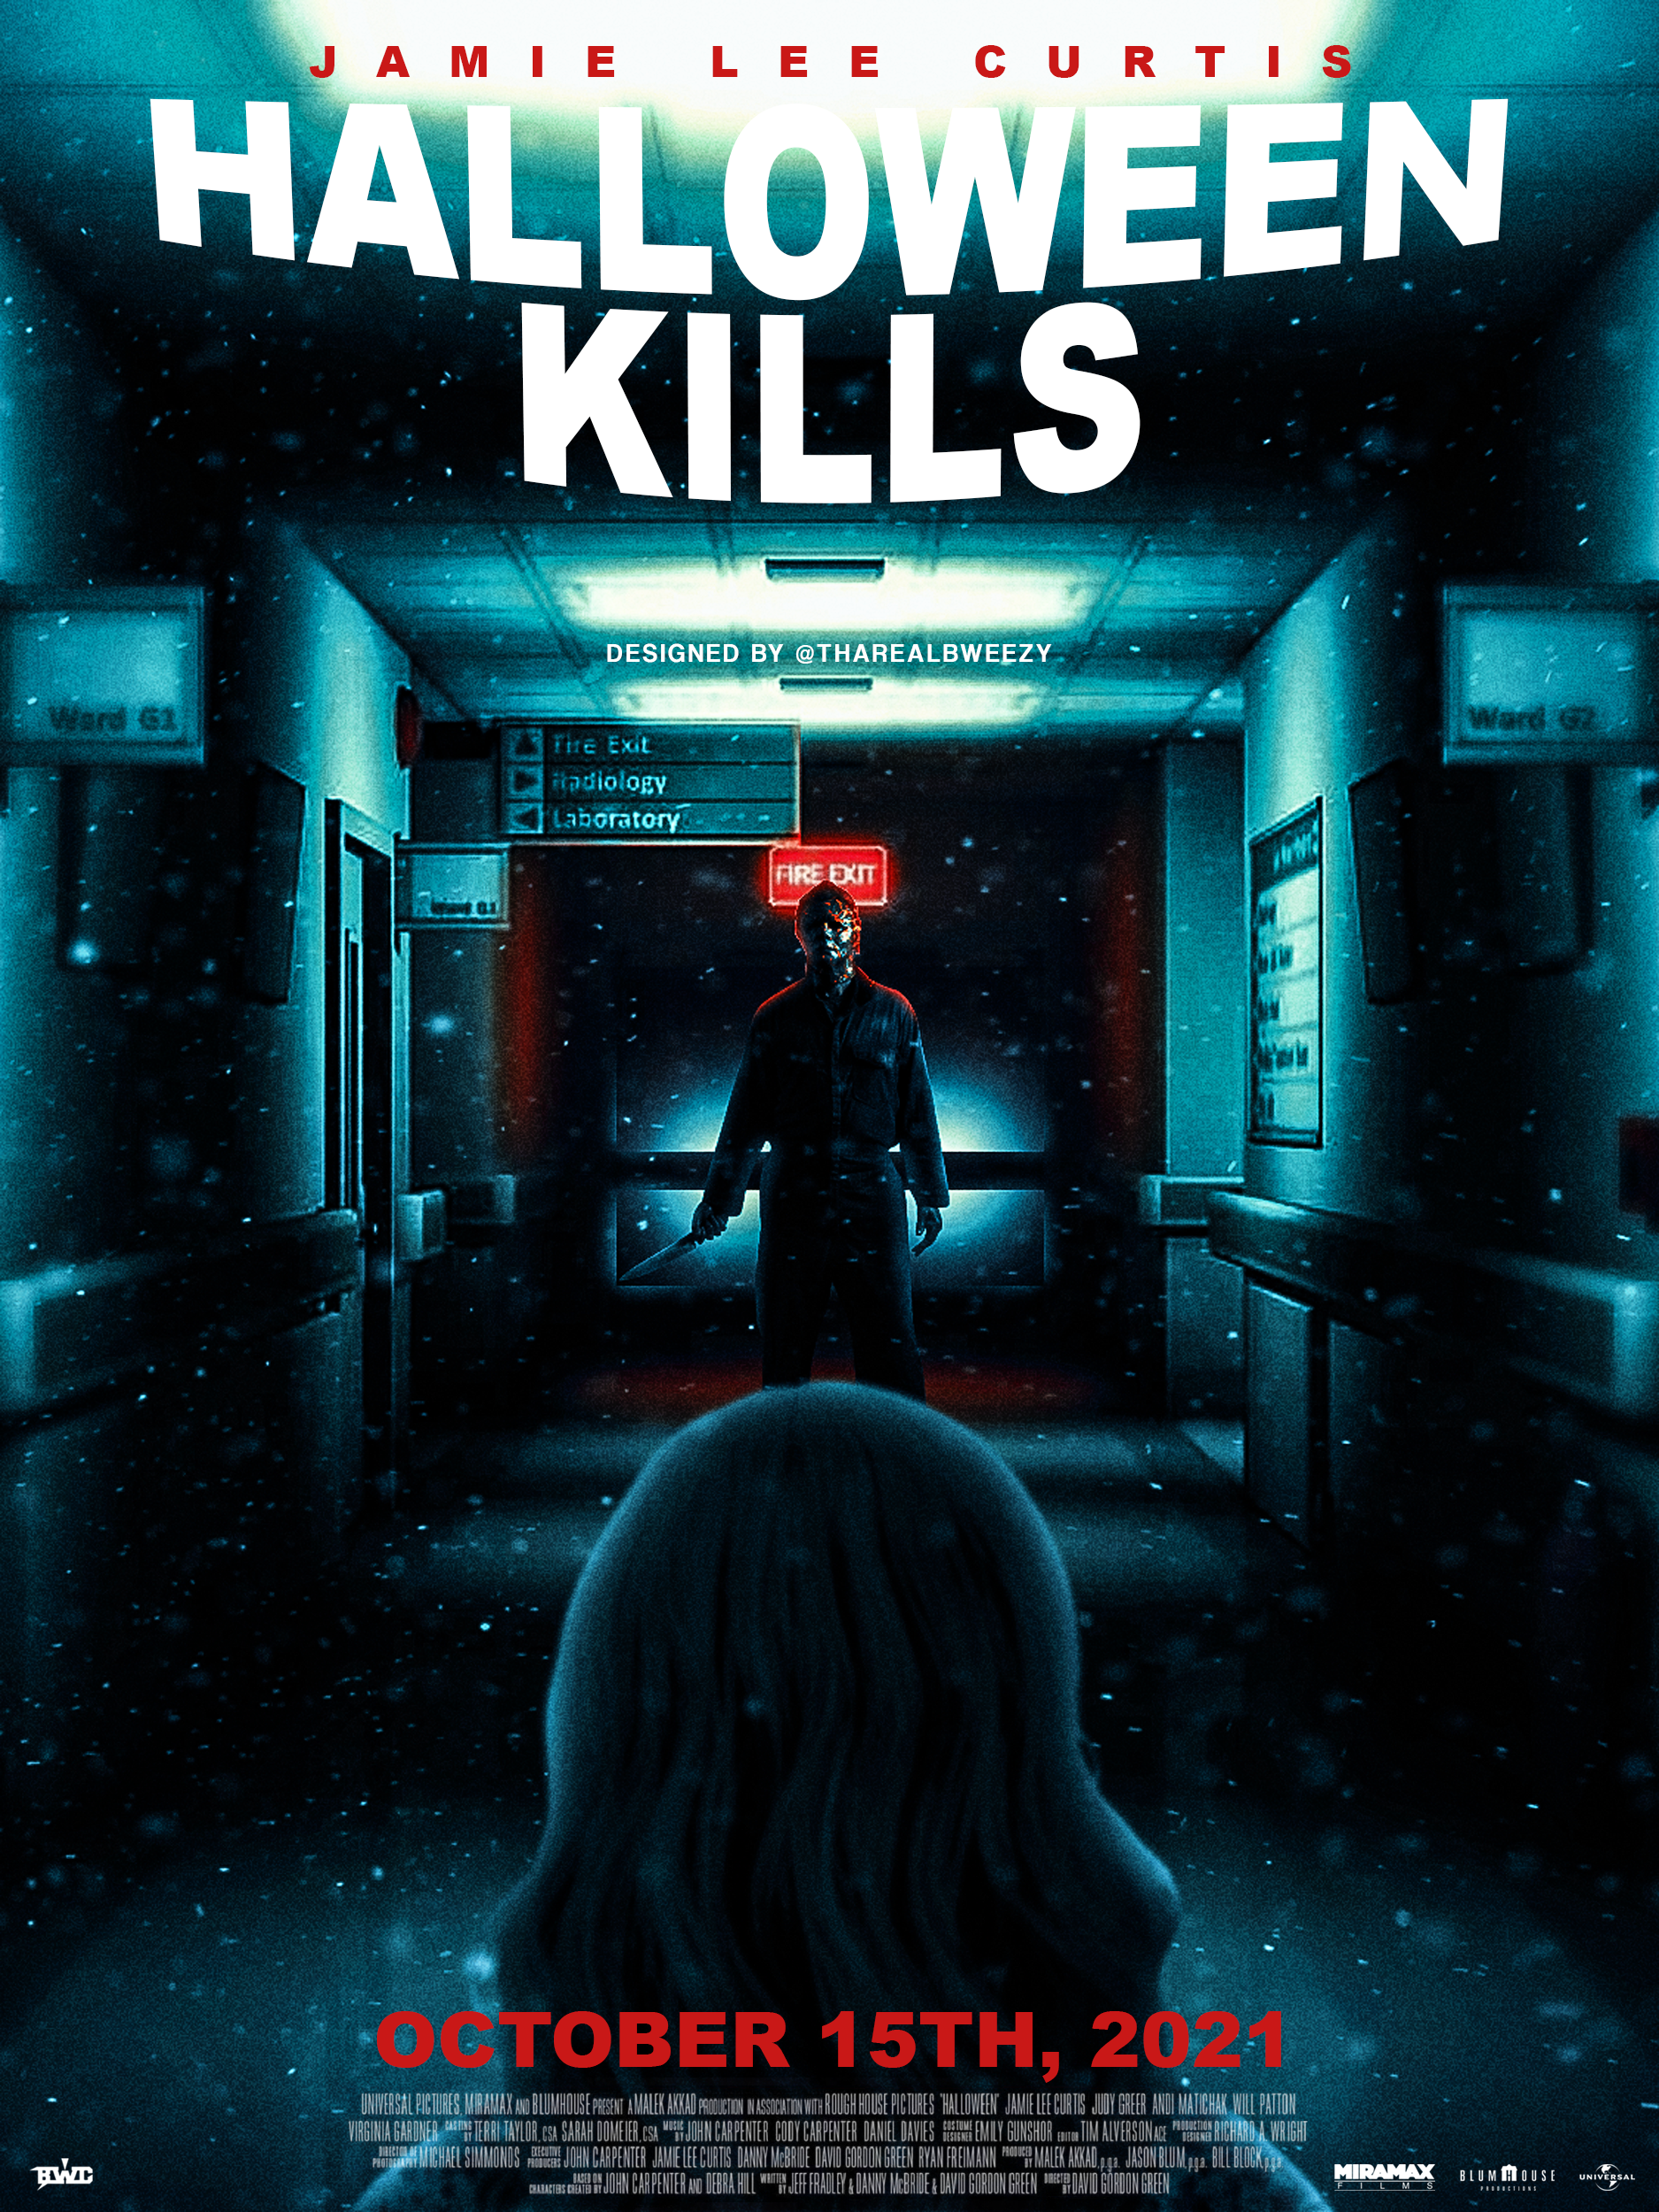 Halloween Kills Hospital Scene Concept Poster. Designed By Me: Halloweenseries